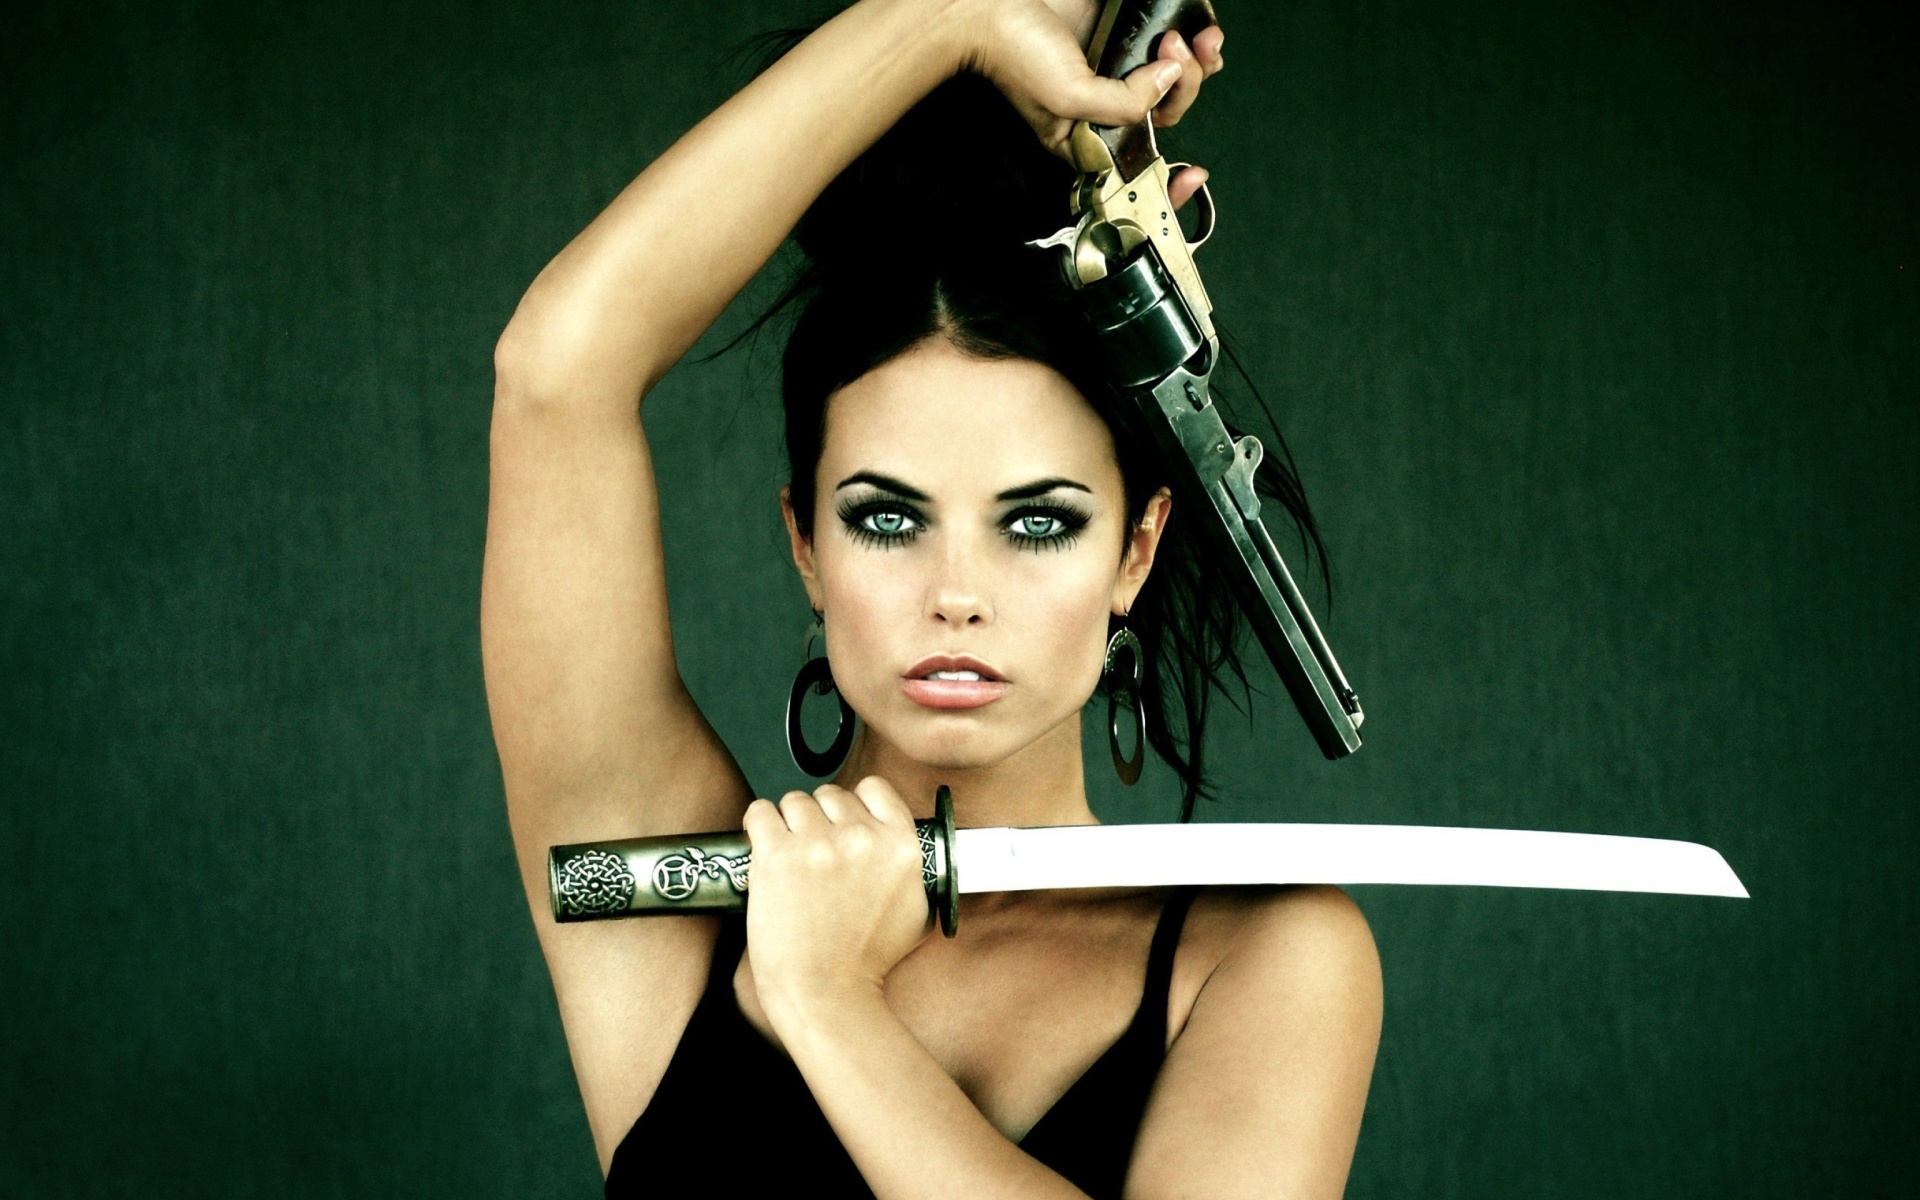 Обои Warrior girl with swords 1920x1200